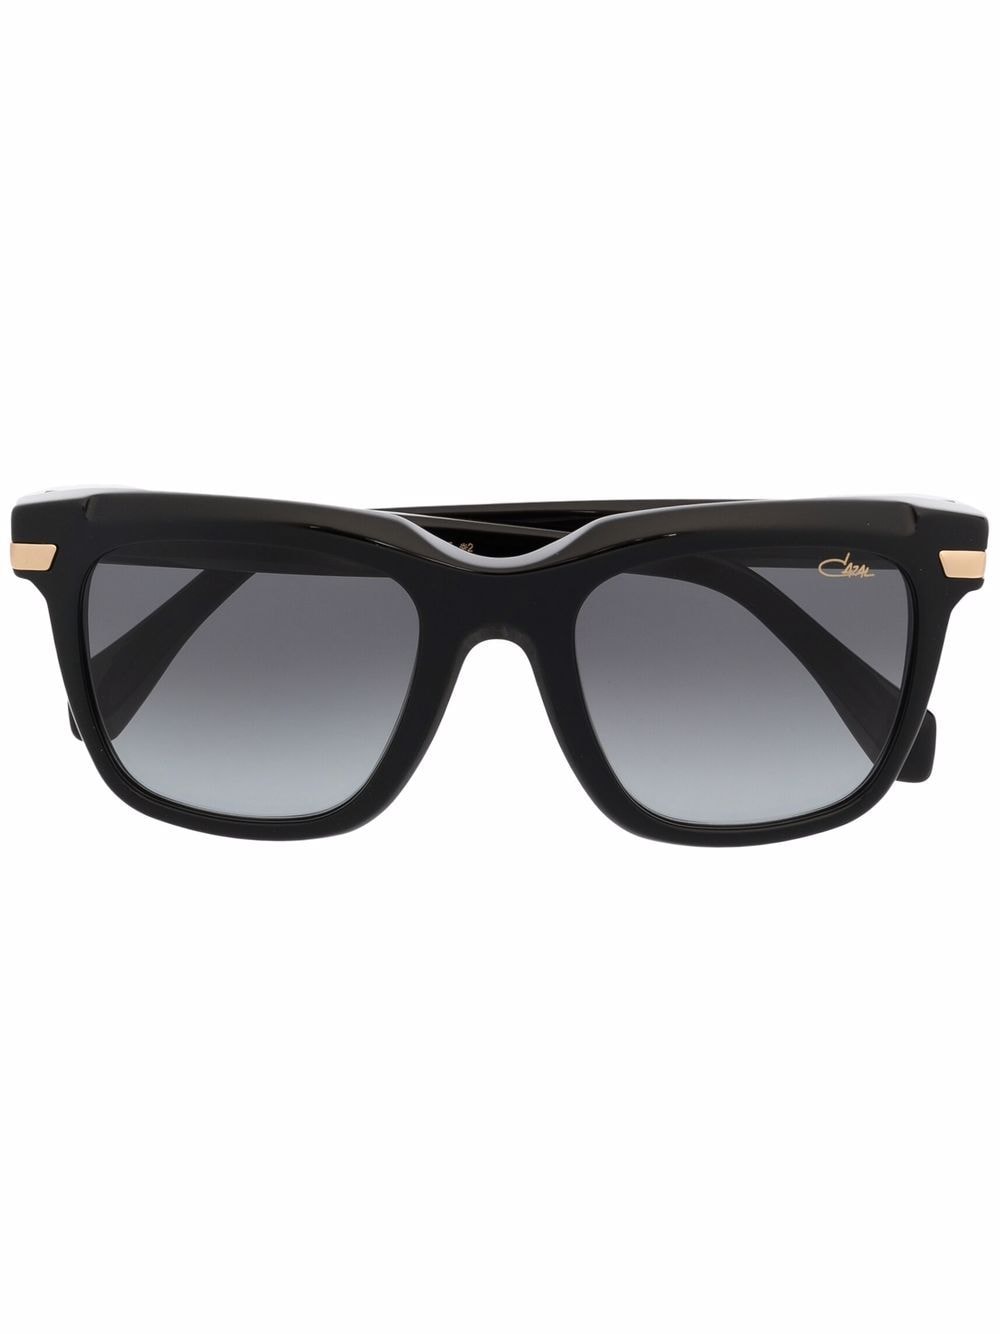 Cazal 8501 square-frame sunglasses - Black